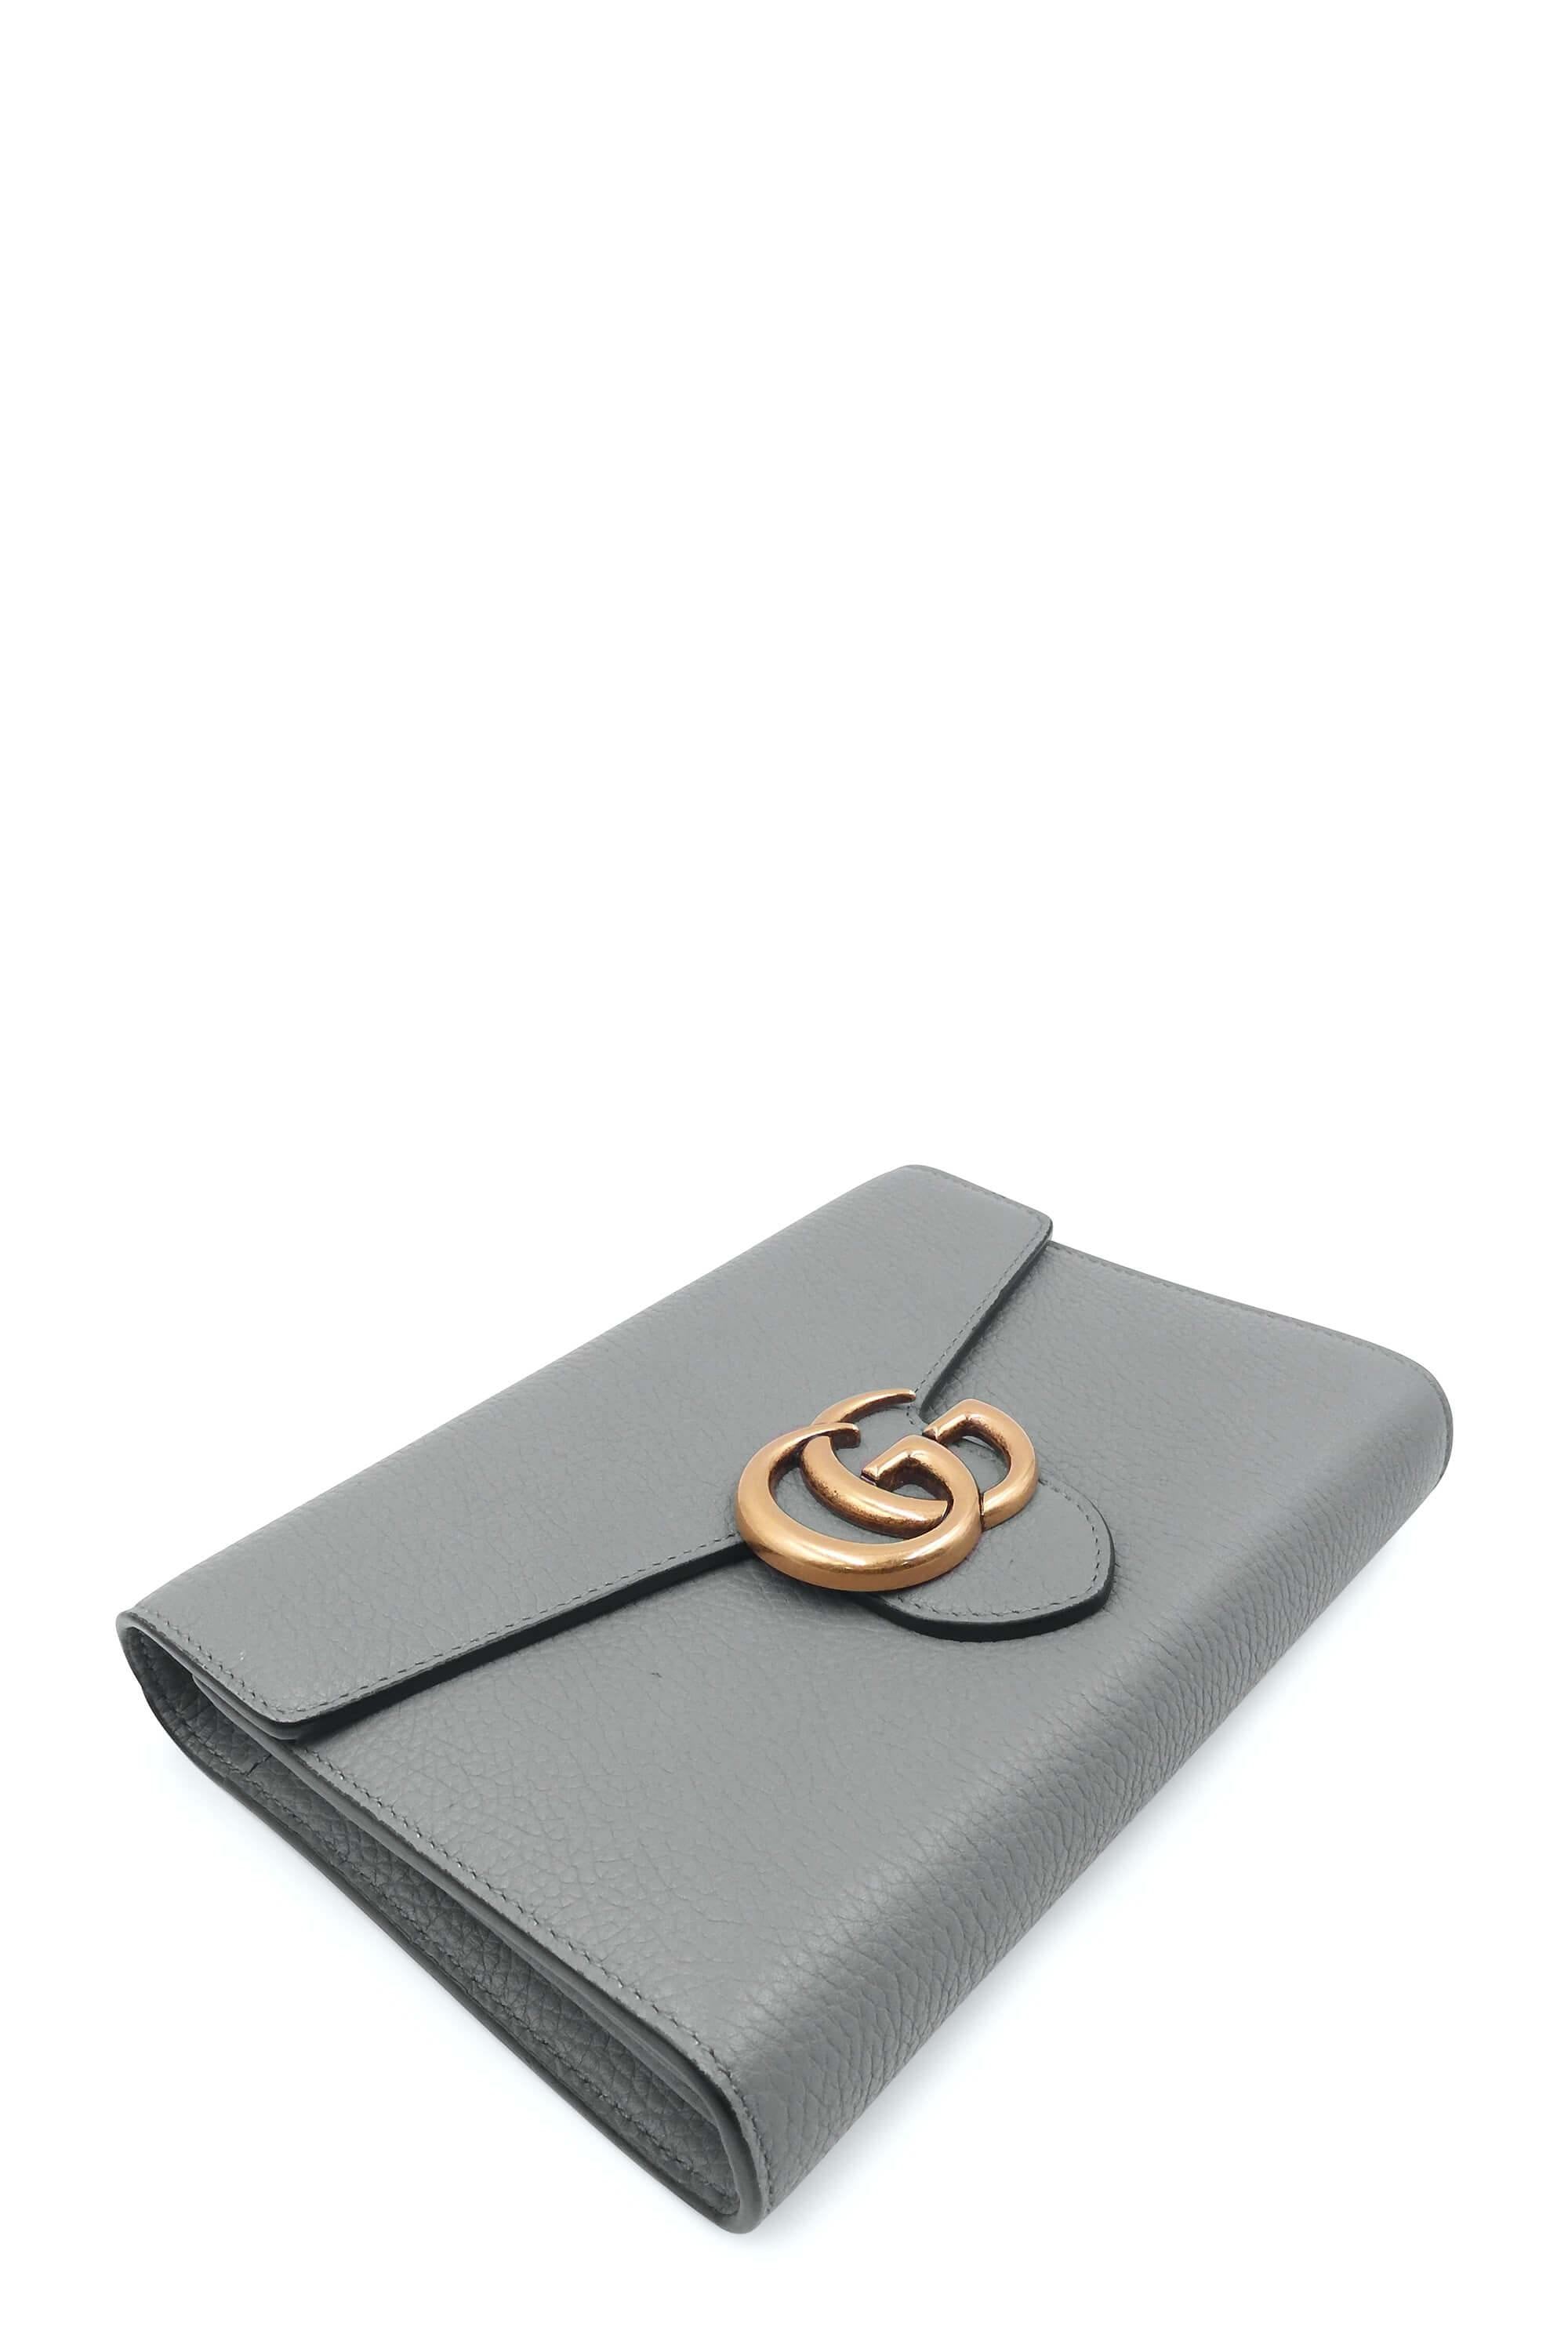 Gucci Gg Marmont Leather Mini Chain Bag in Grey